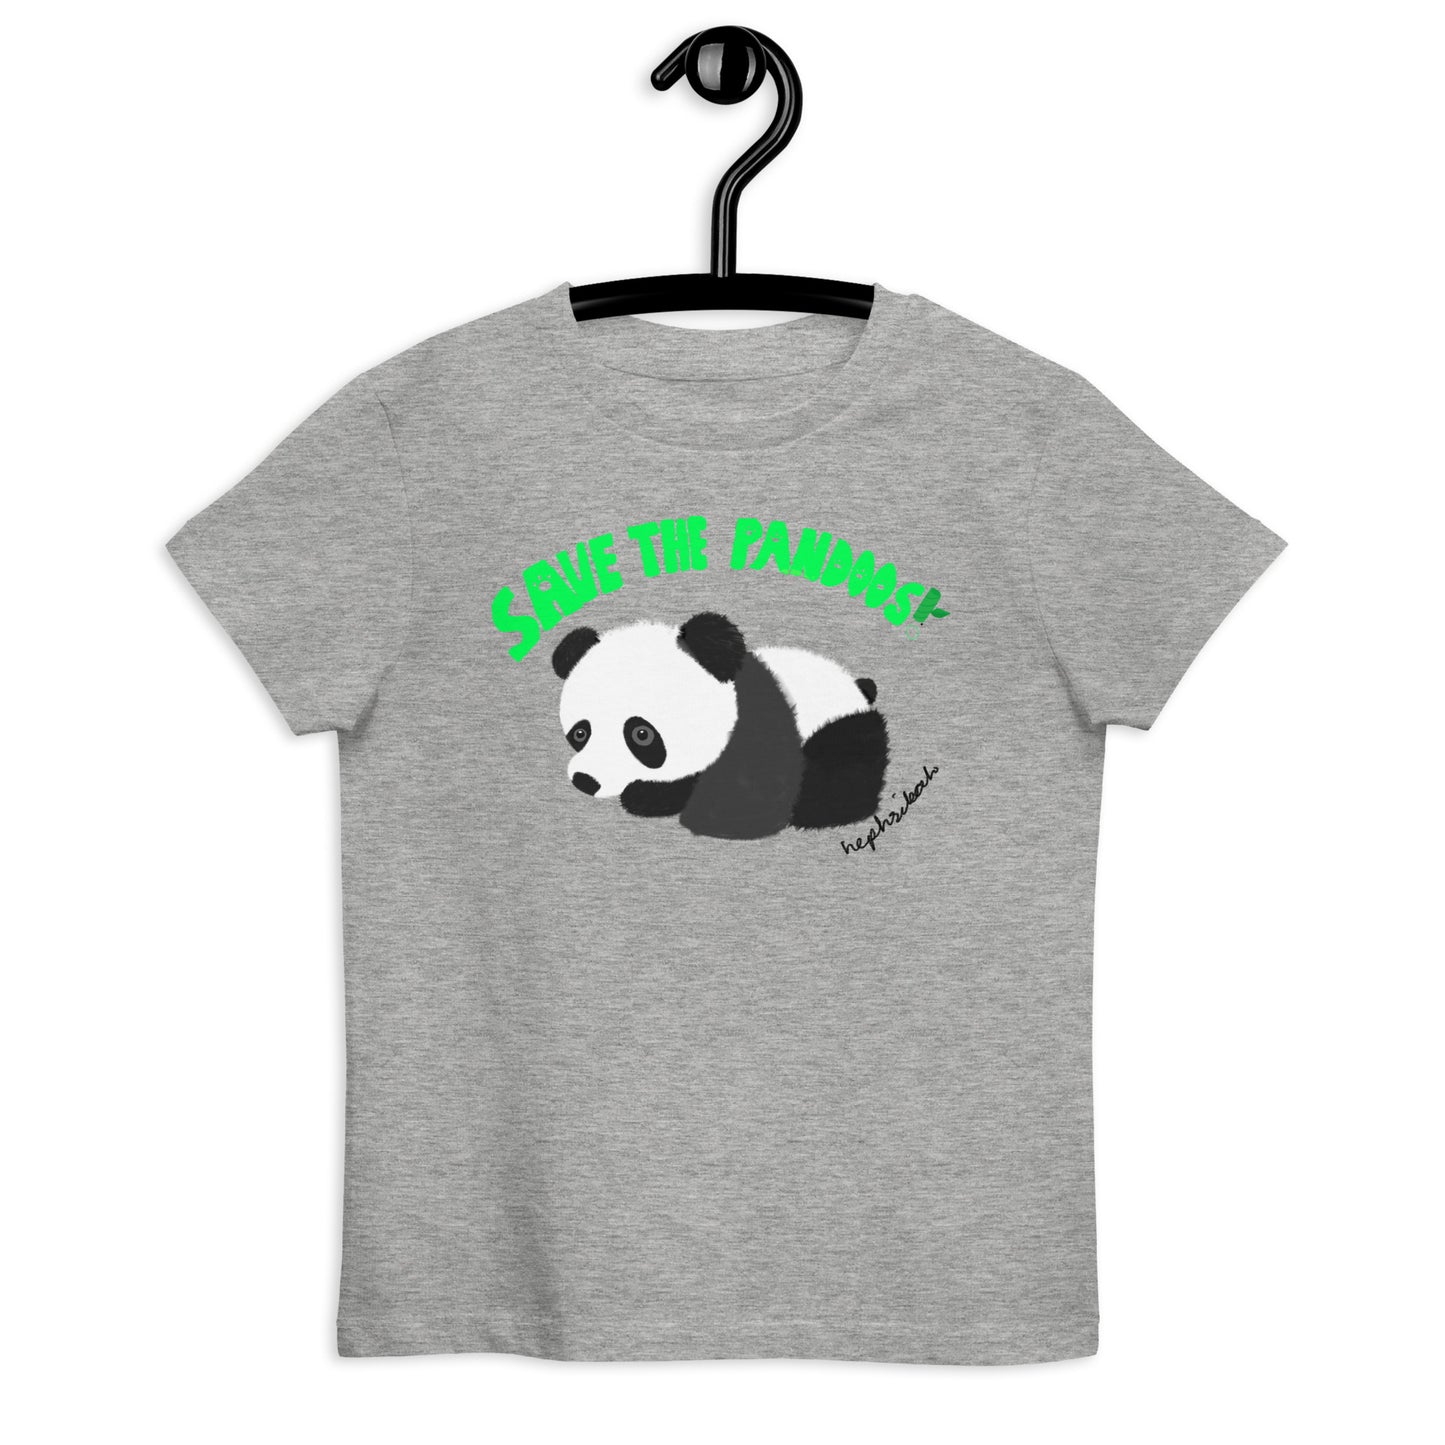 Save the Pandoos! Organic Cotton kids t-shirt